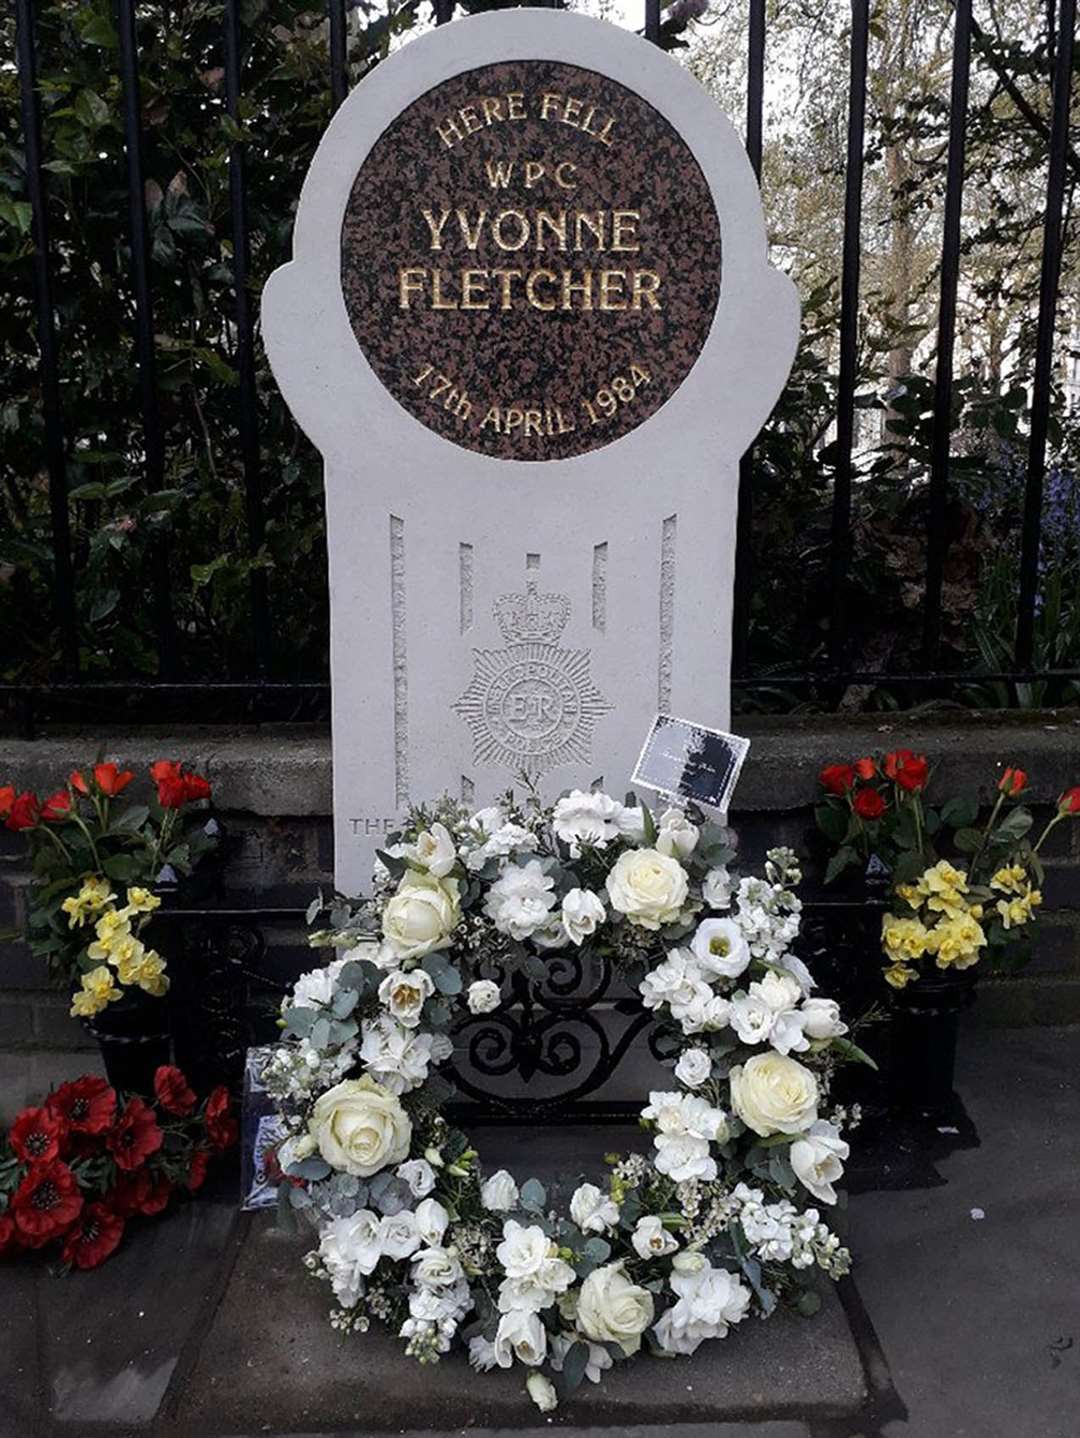 The memorial to Yvonne Fletcher in St James’s Square, London (Metropolitan Police/PA)